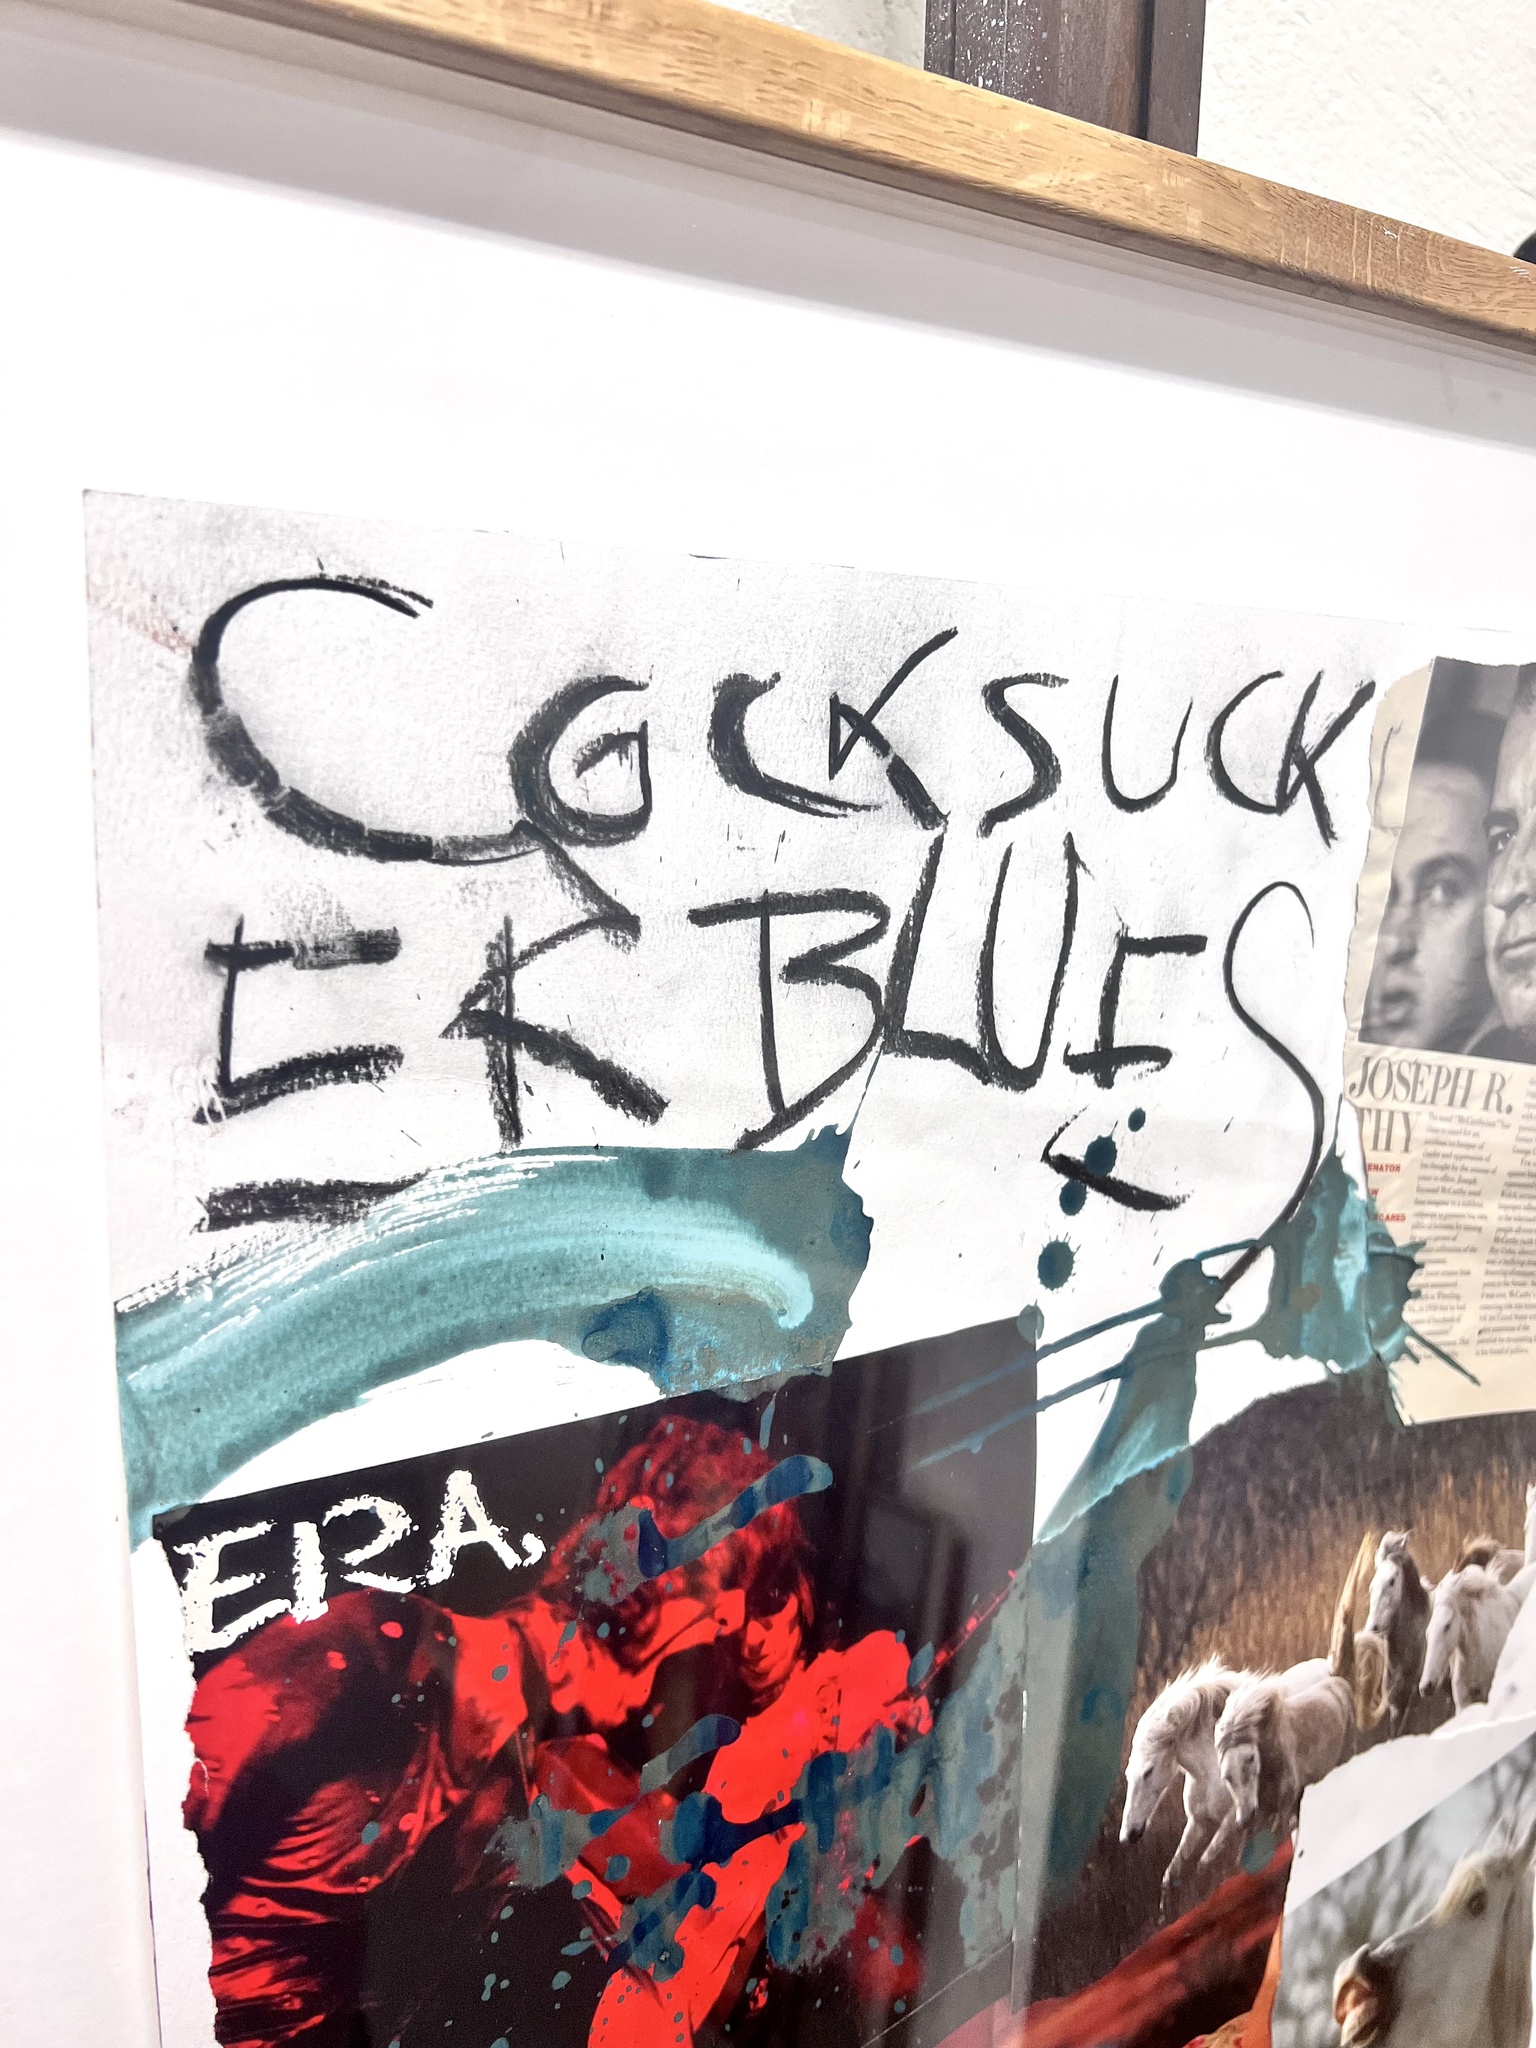 "Co*ksucker Blues" Mixed media av Ulf Lundell 69x85 cm